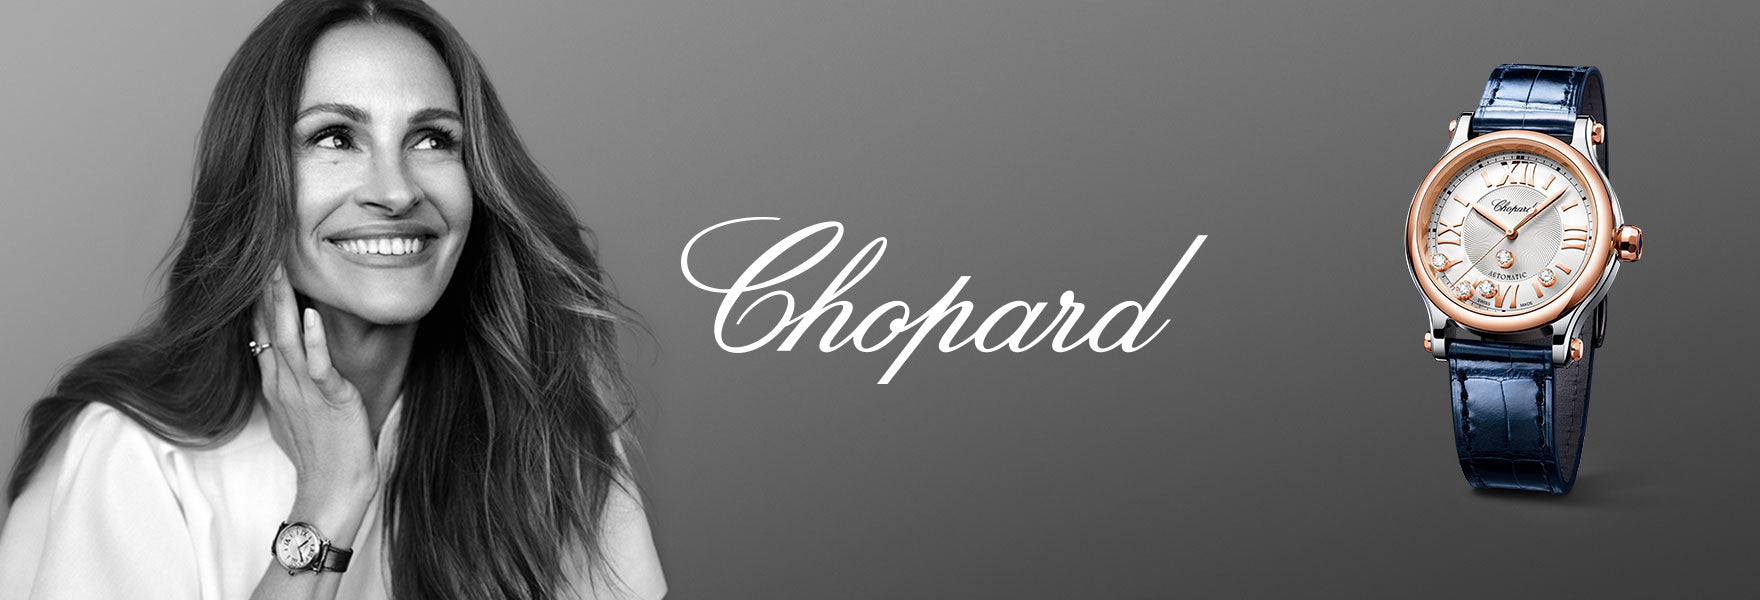 Chopard Homepage Banner